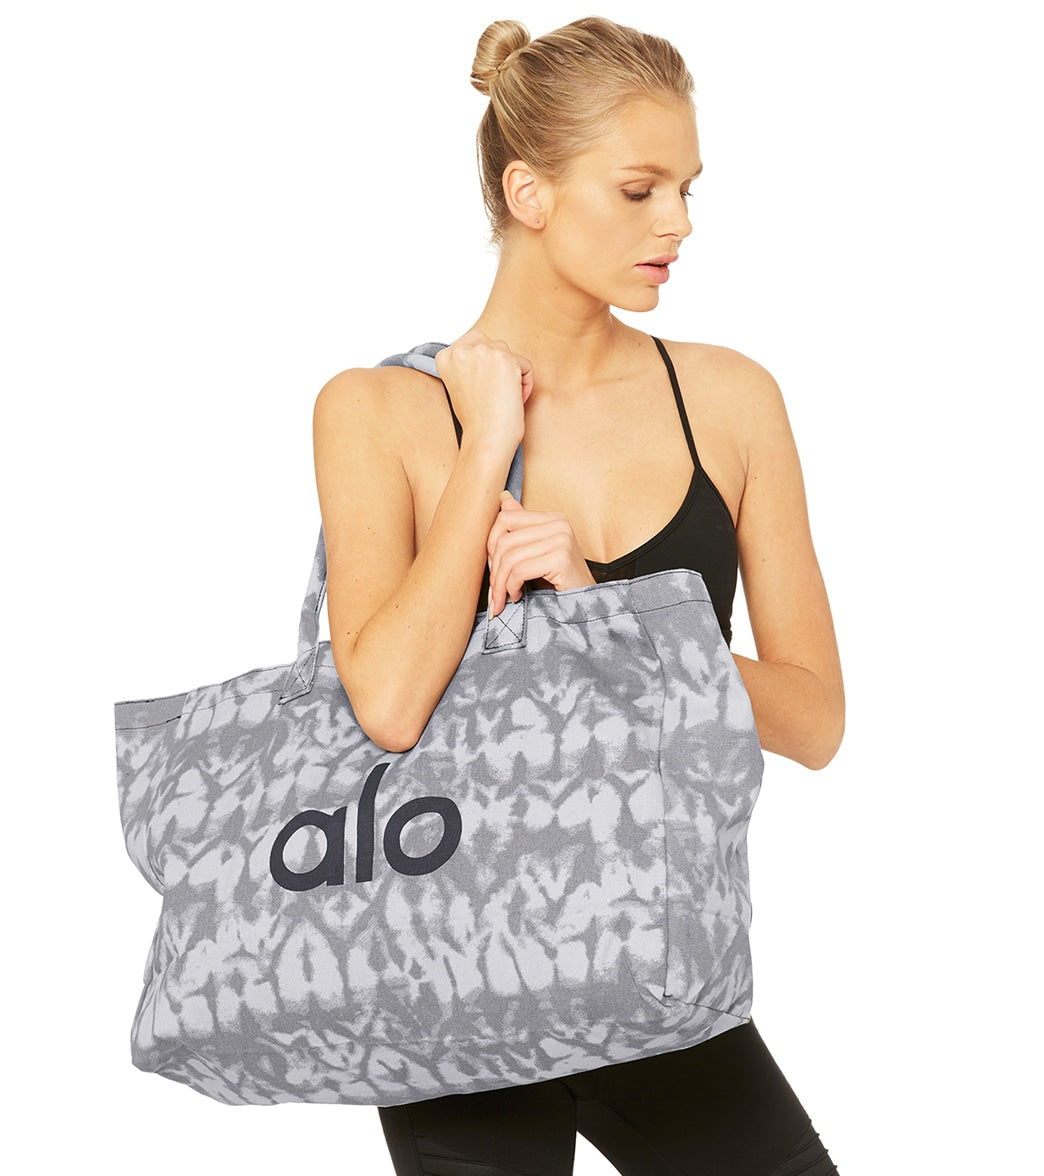 ALO Yoga Women XL Canvas Tote Bag Gray Tie Dye NWT Athletic Gym